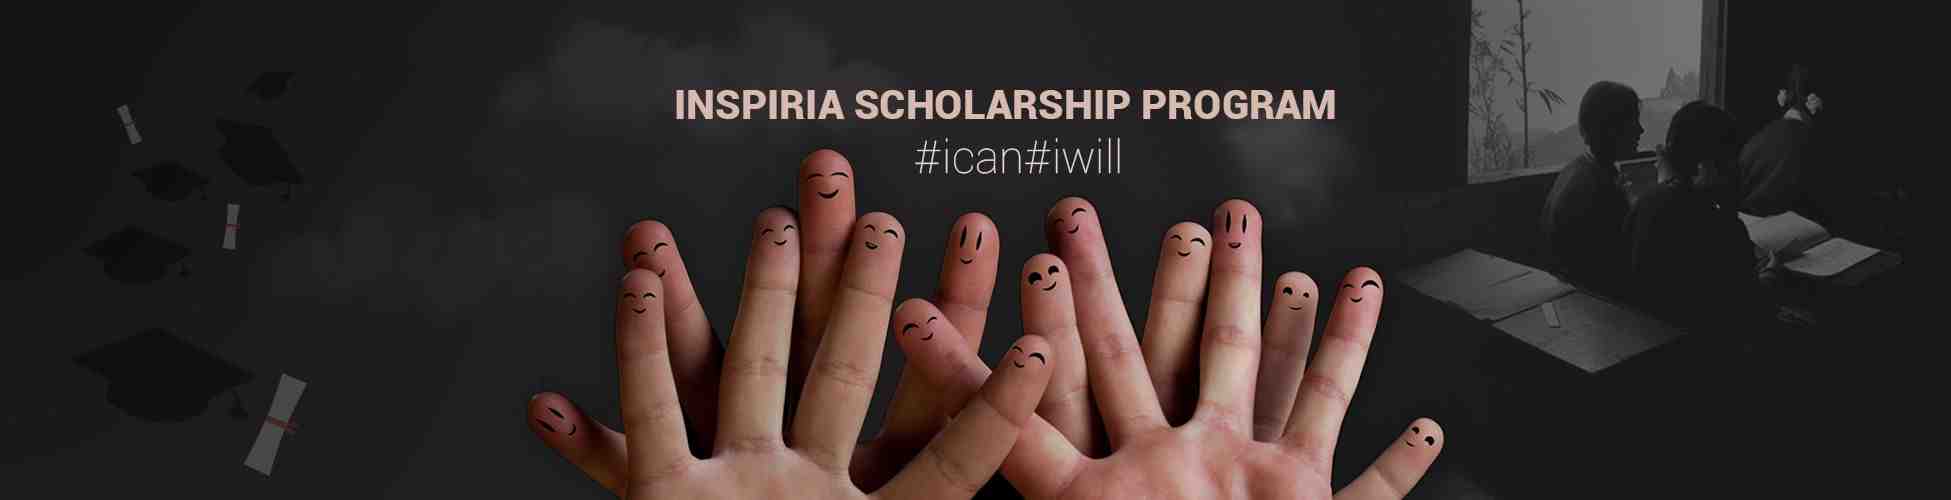 inspiria-scholarship-program